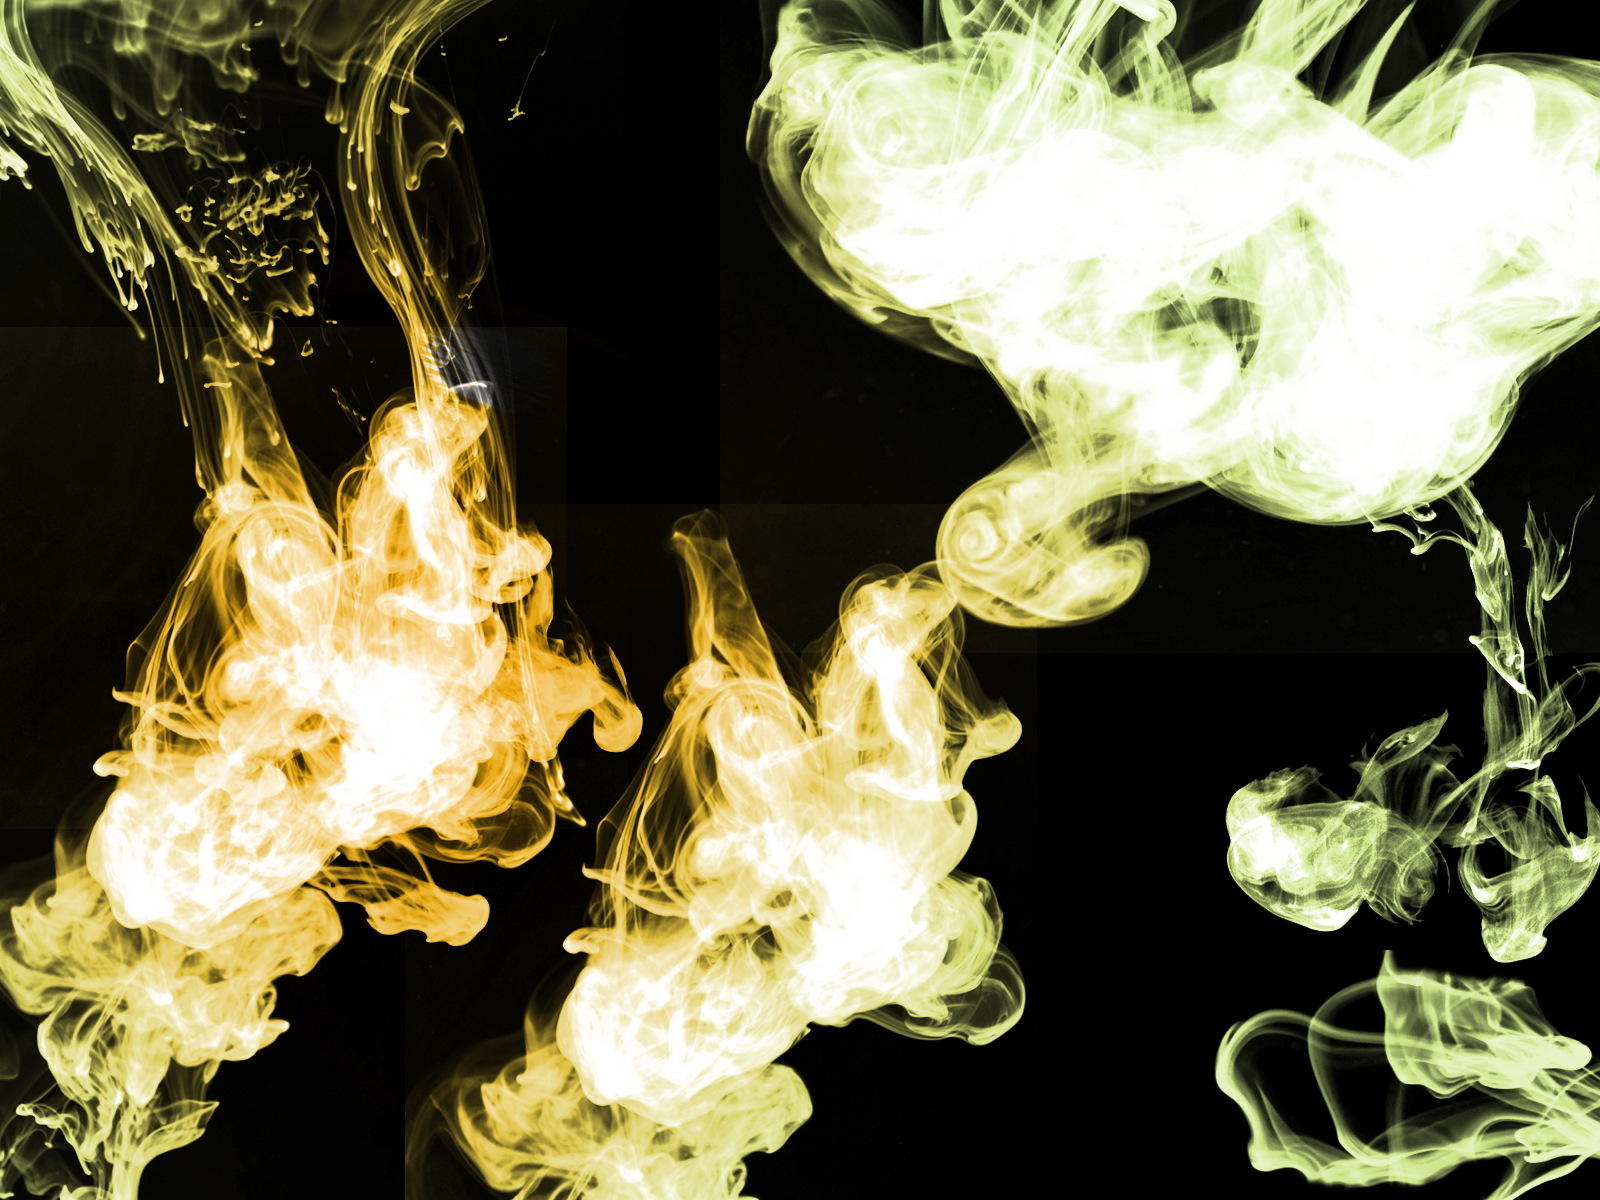 Abstract smoke design by keczup11.